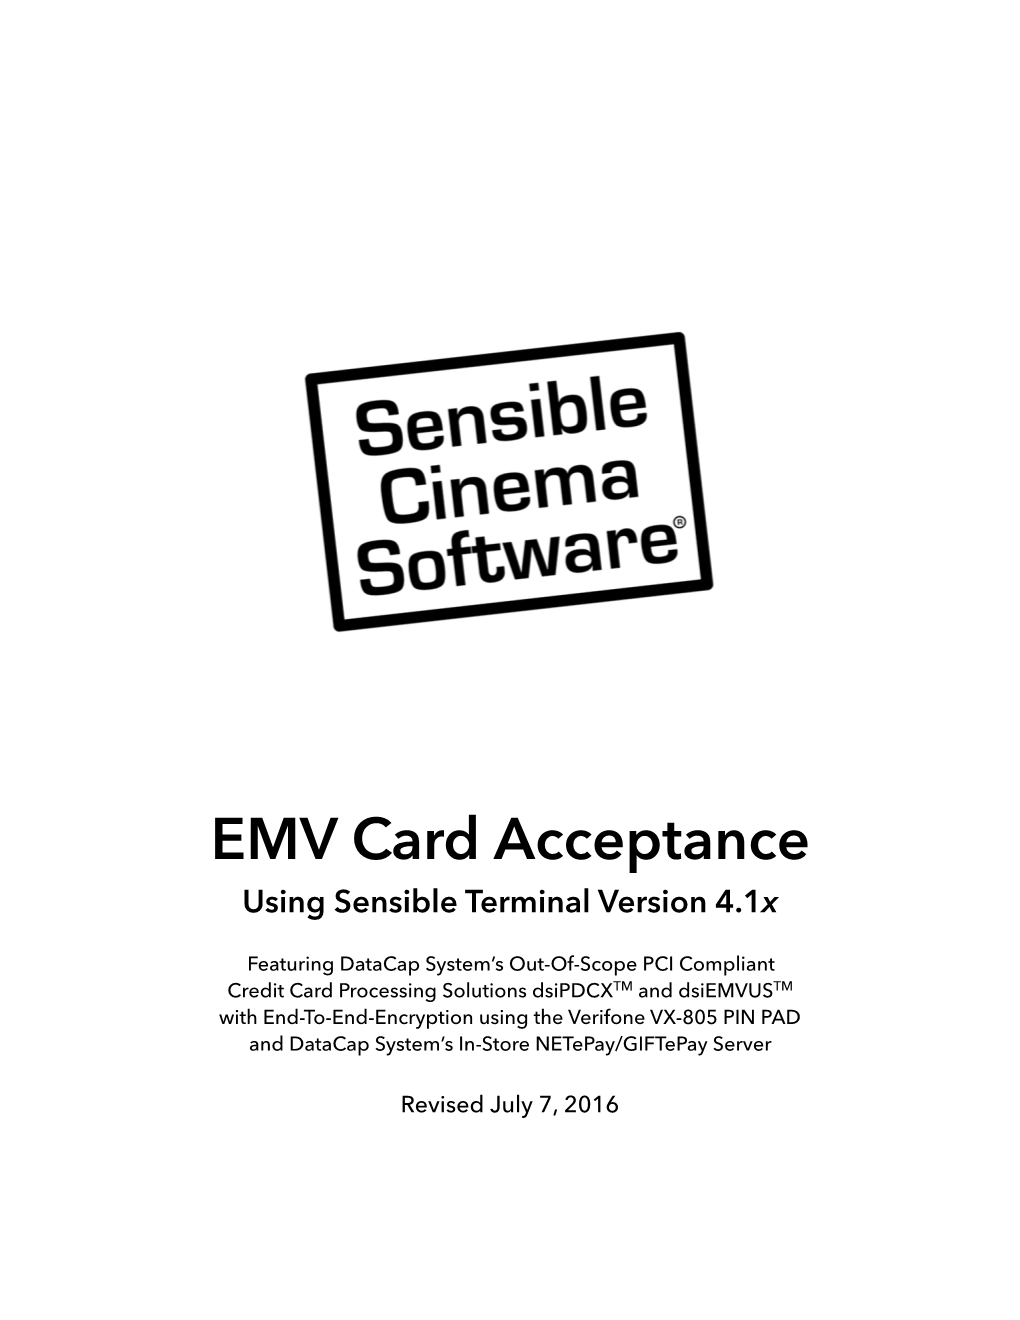 EMV Card Acceptance Using Sensible Terminal Version 4.1X